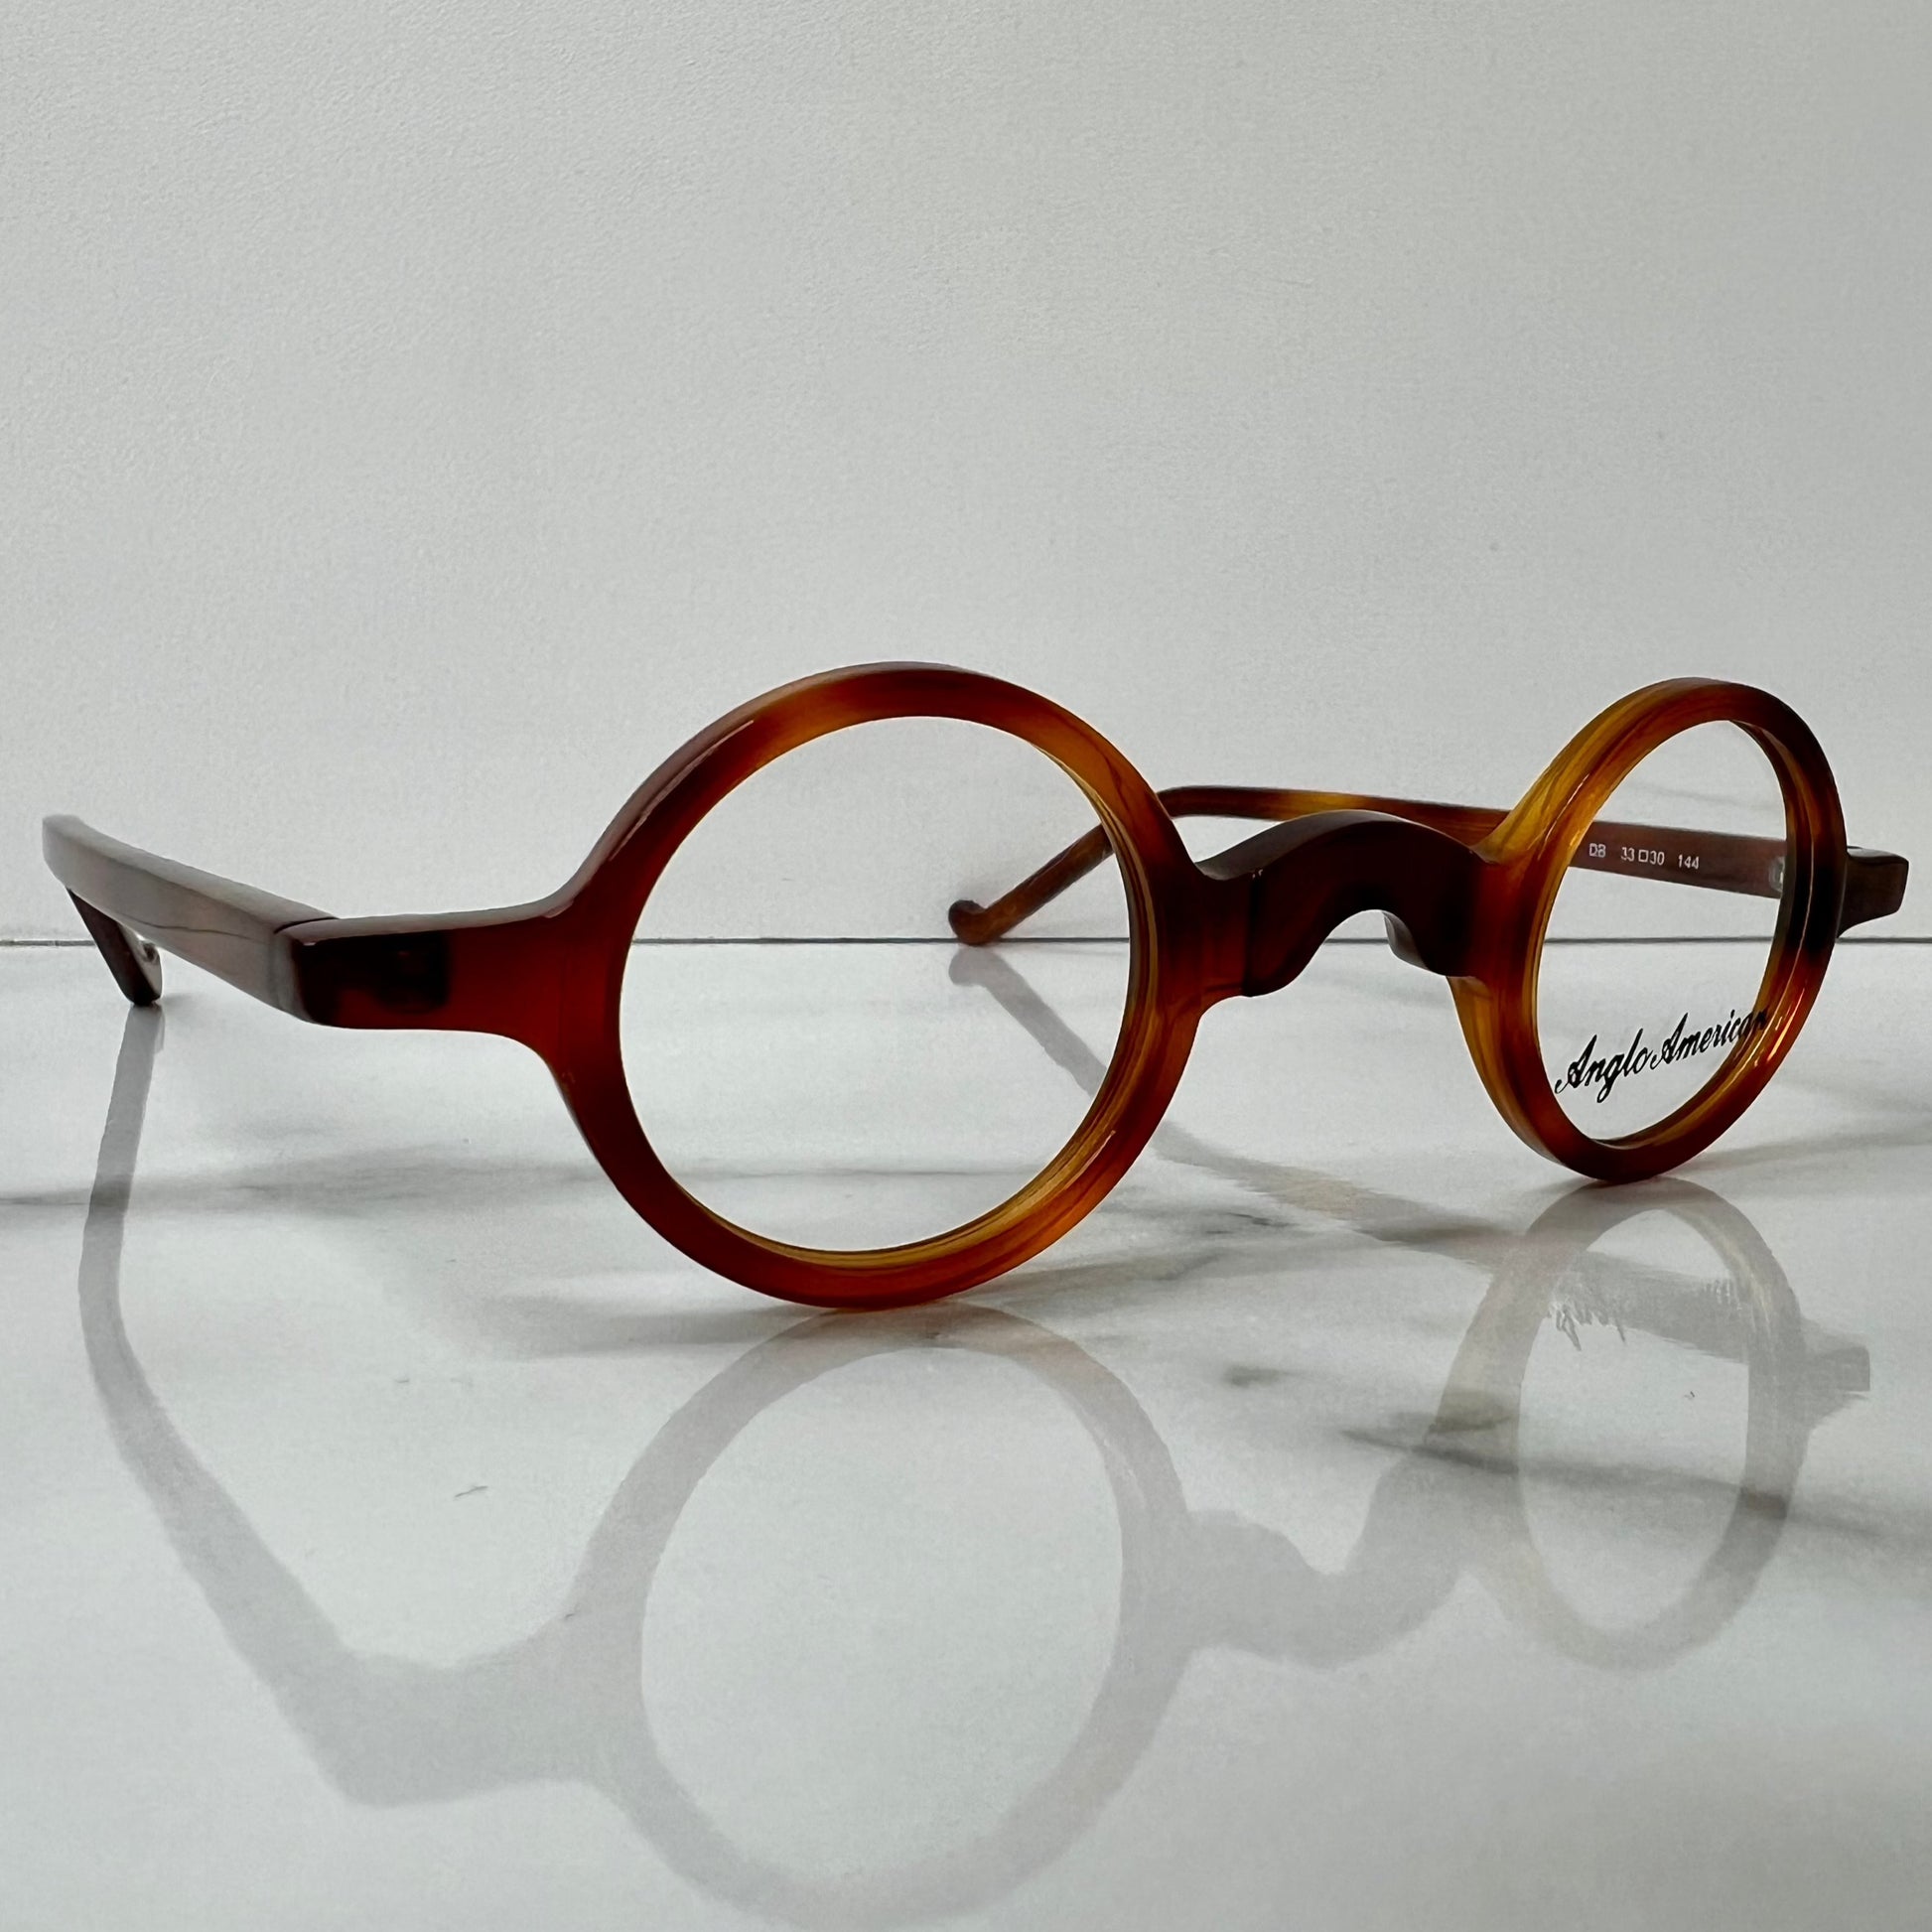 Anglo American Groucho Glasses Frames Tortoise Shell Round London Eyewear.